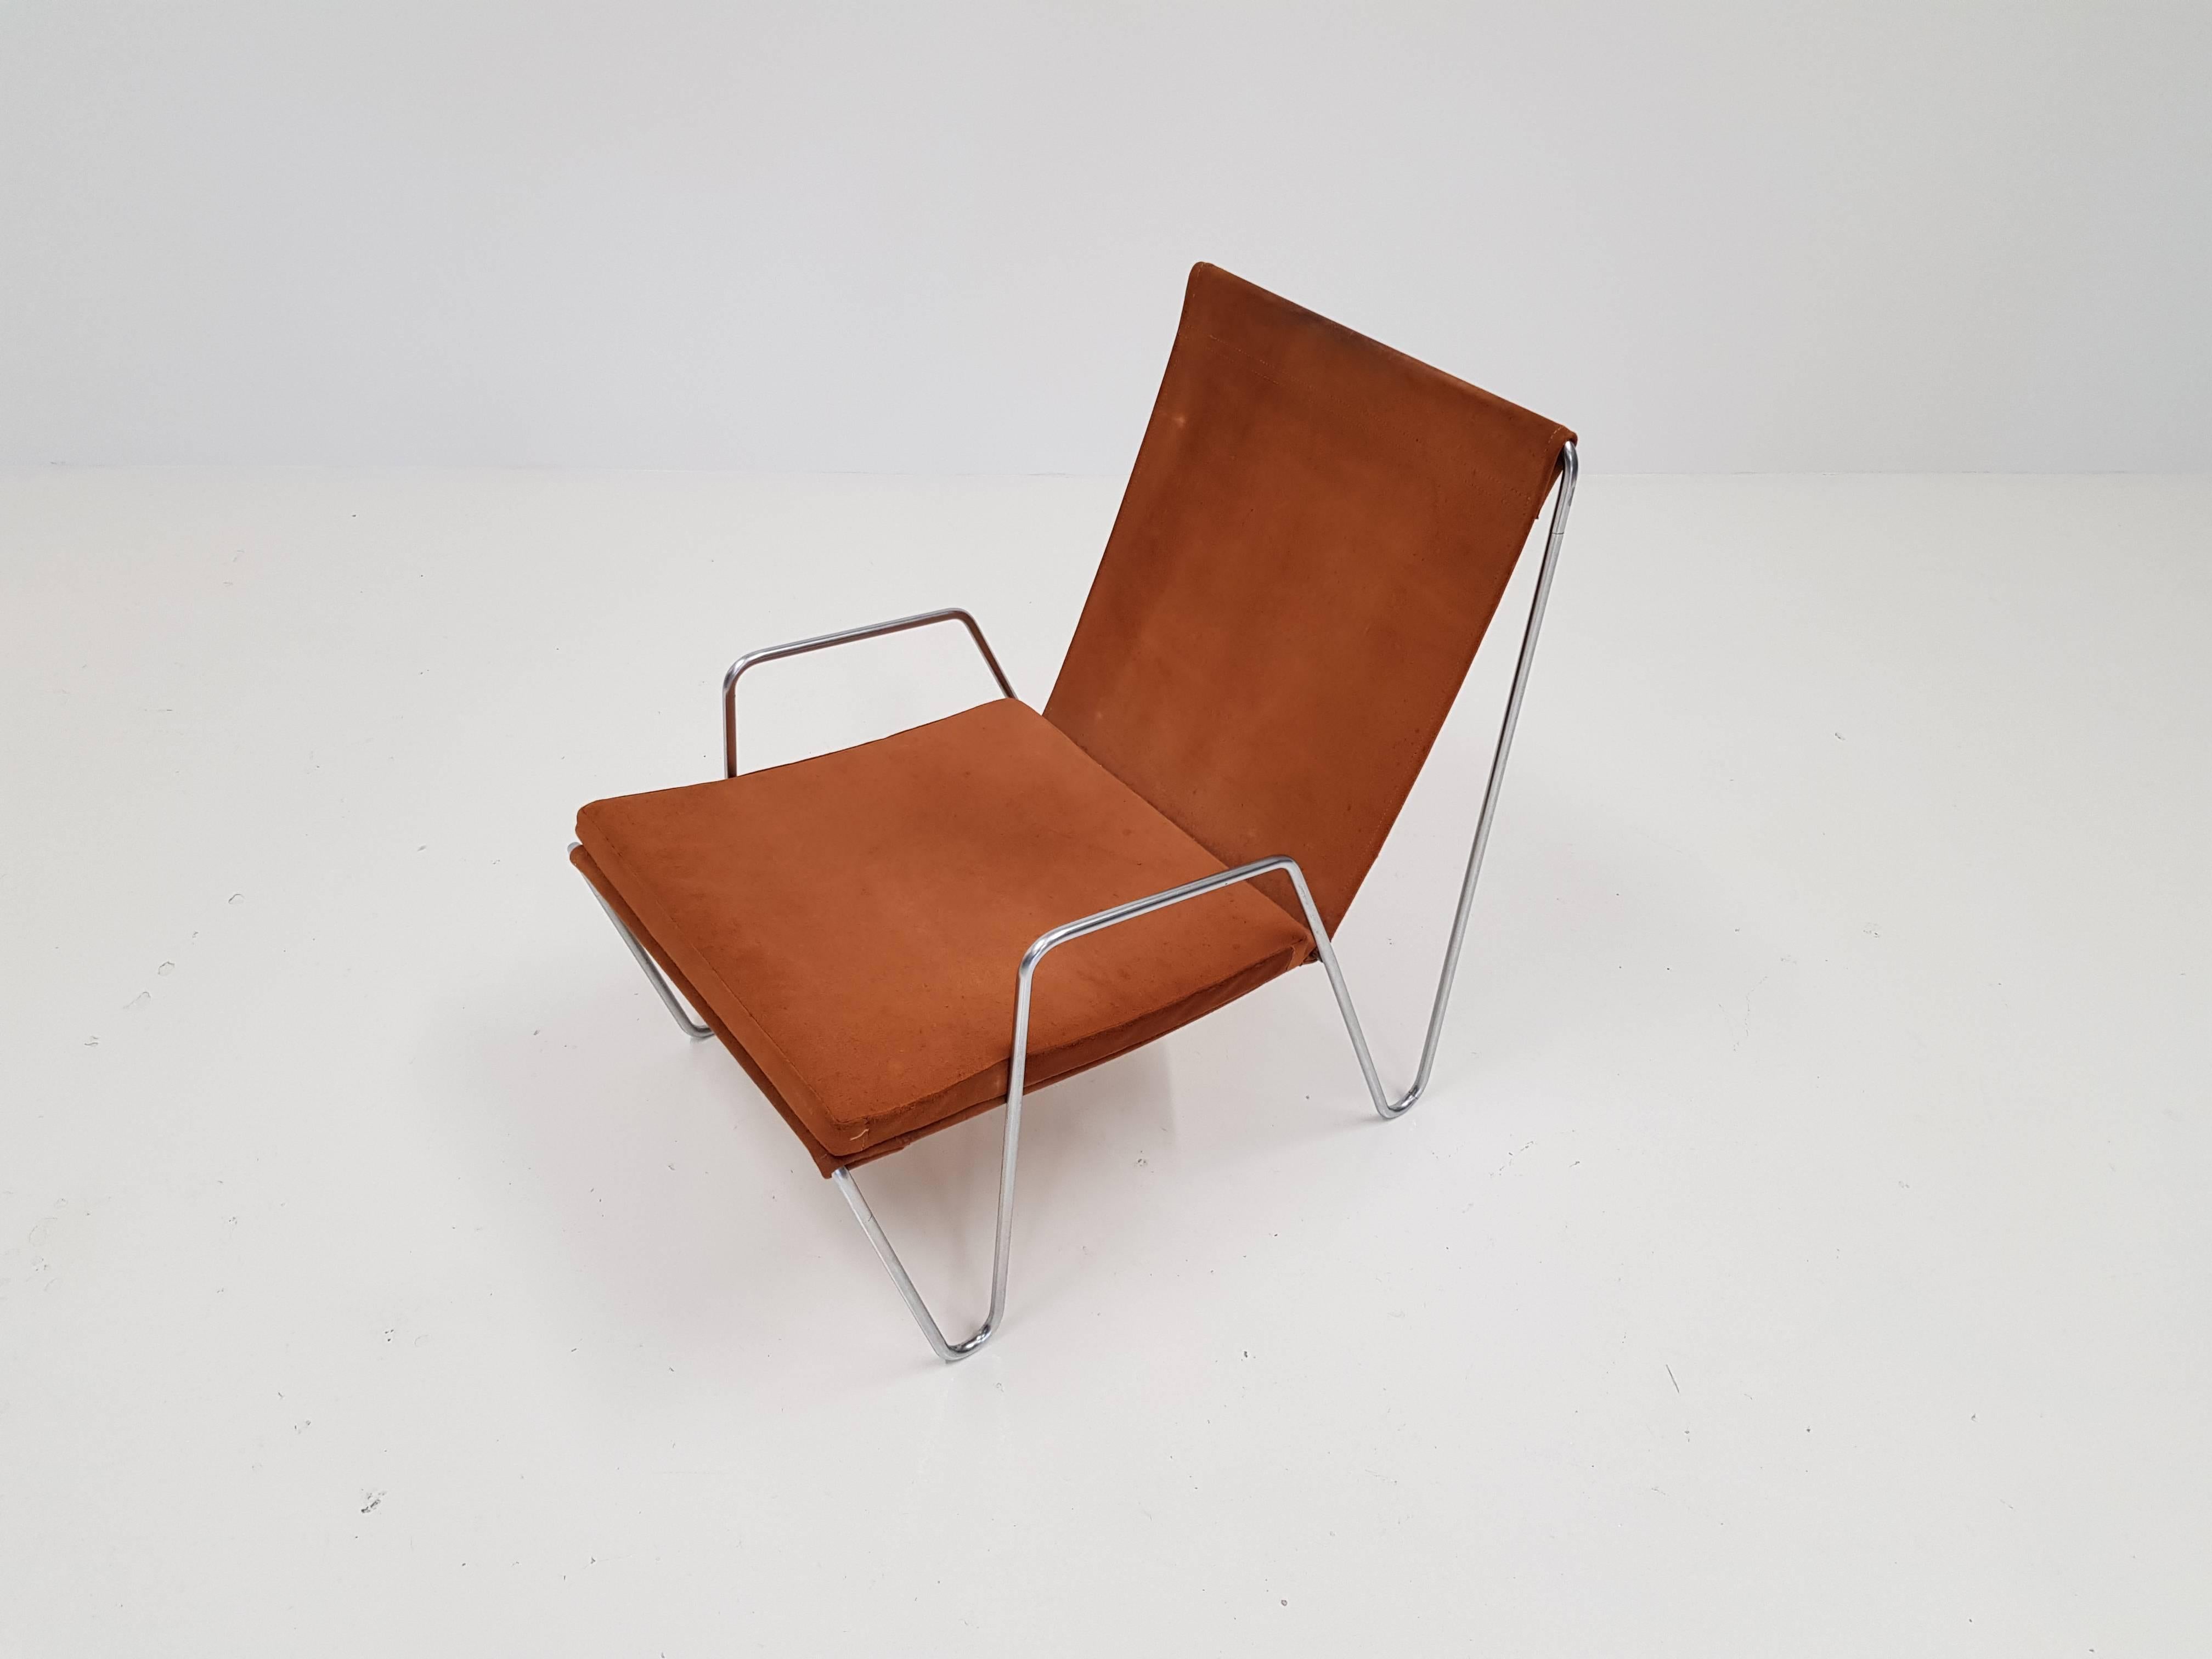 20th Century Verner Panton 'Bachelor' Easy Chair, Manufactured by Fritz Hansen, Denmark, 1955